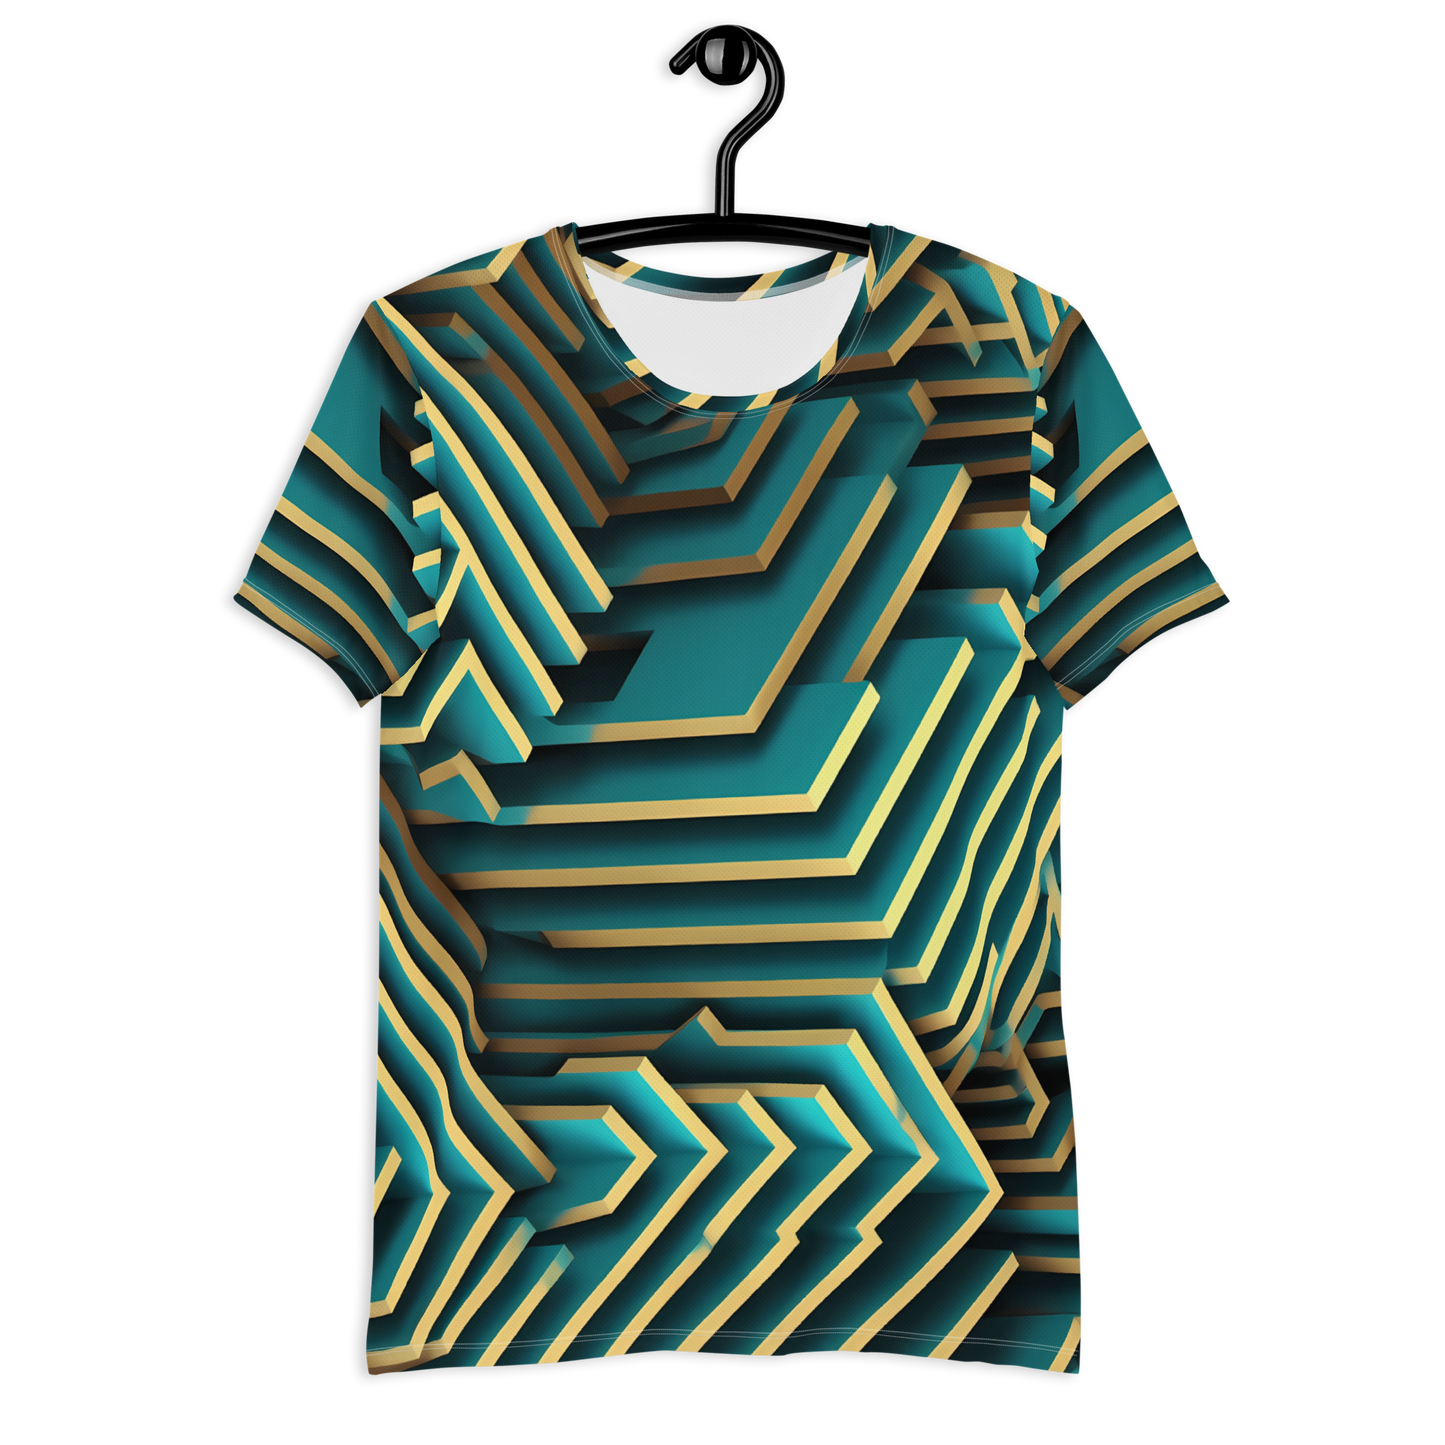 3D Maze Illusion | 3D Patterns | All-Over Print Men's Athletic T-Shirt - #5